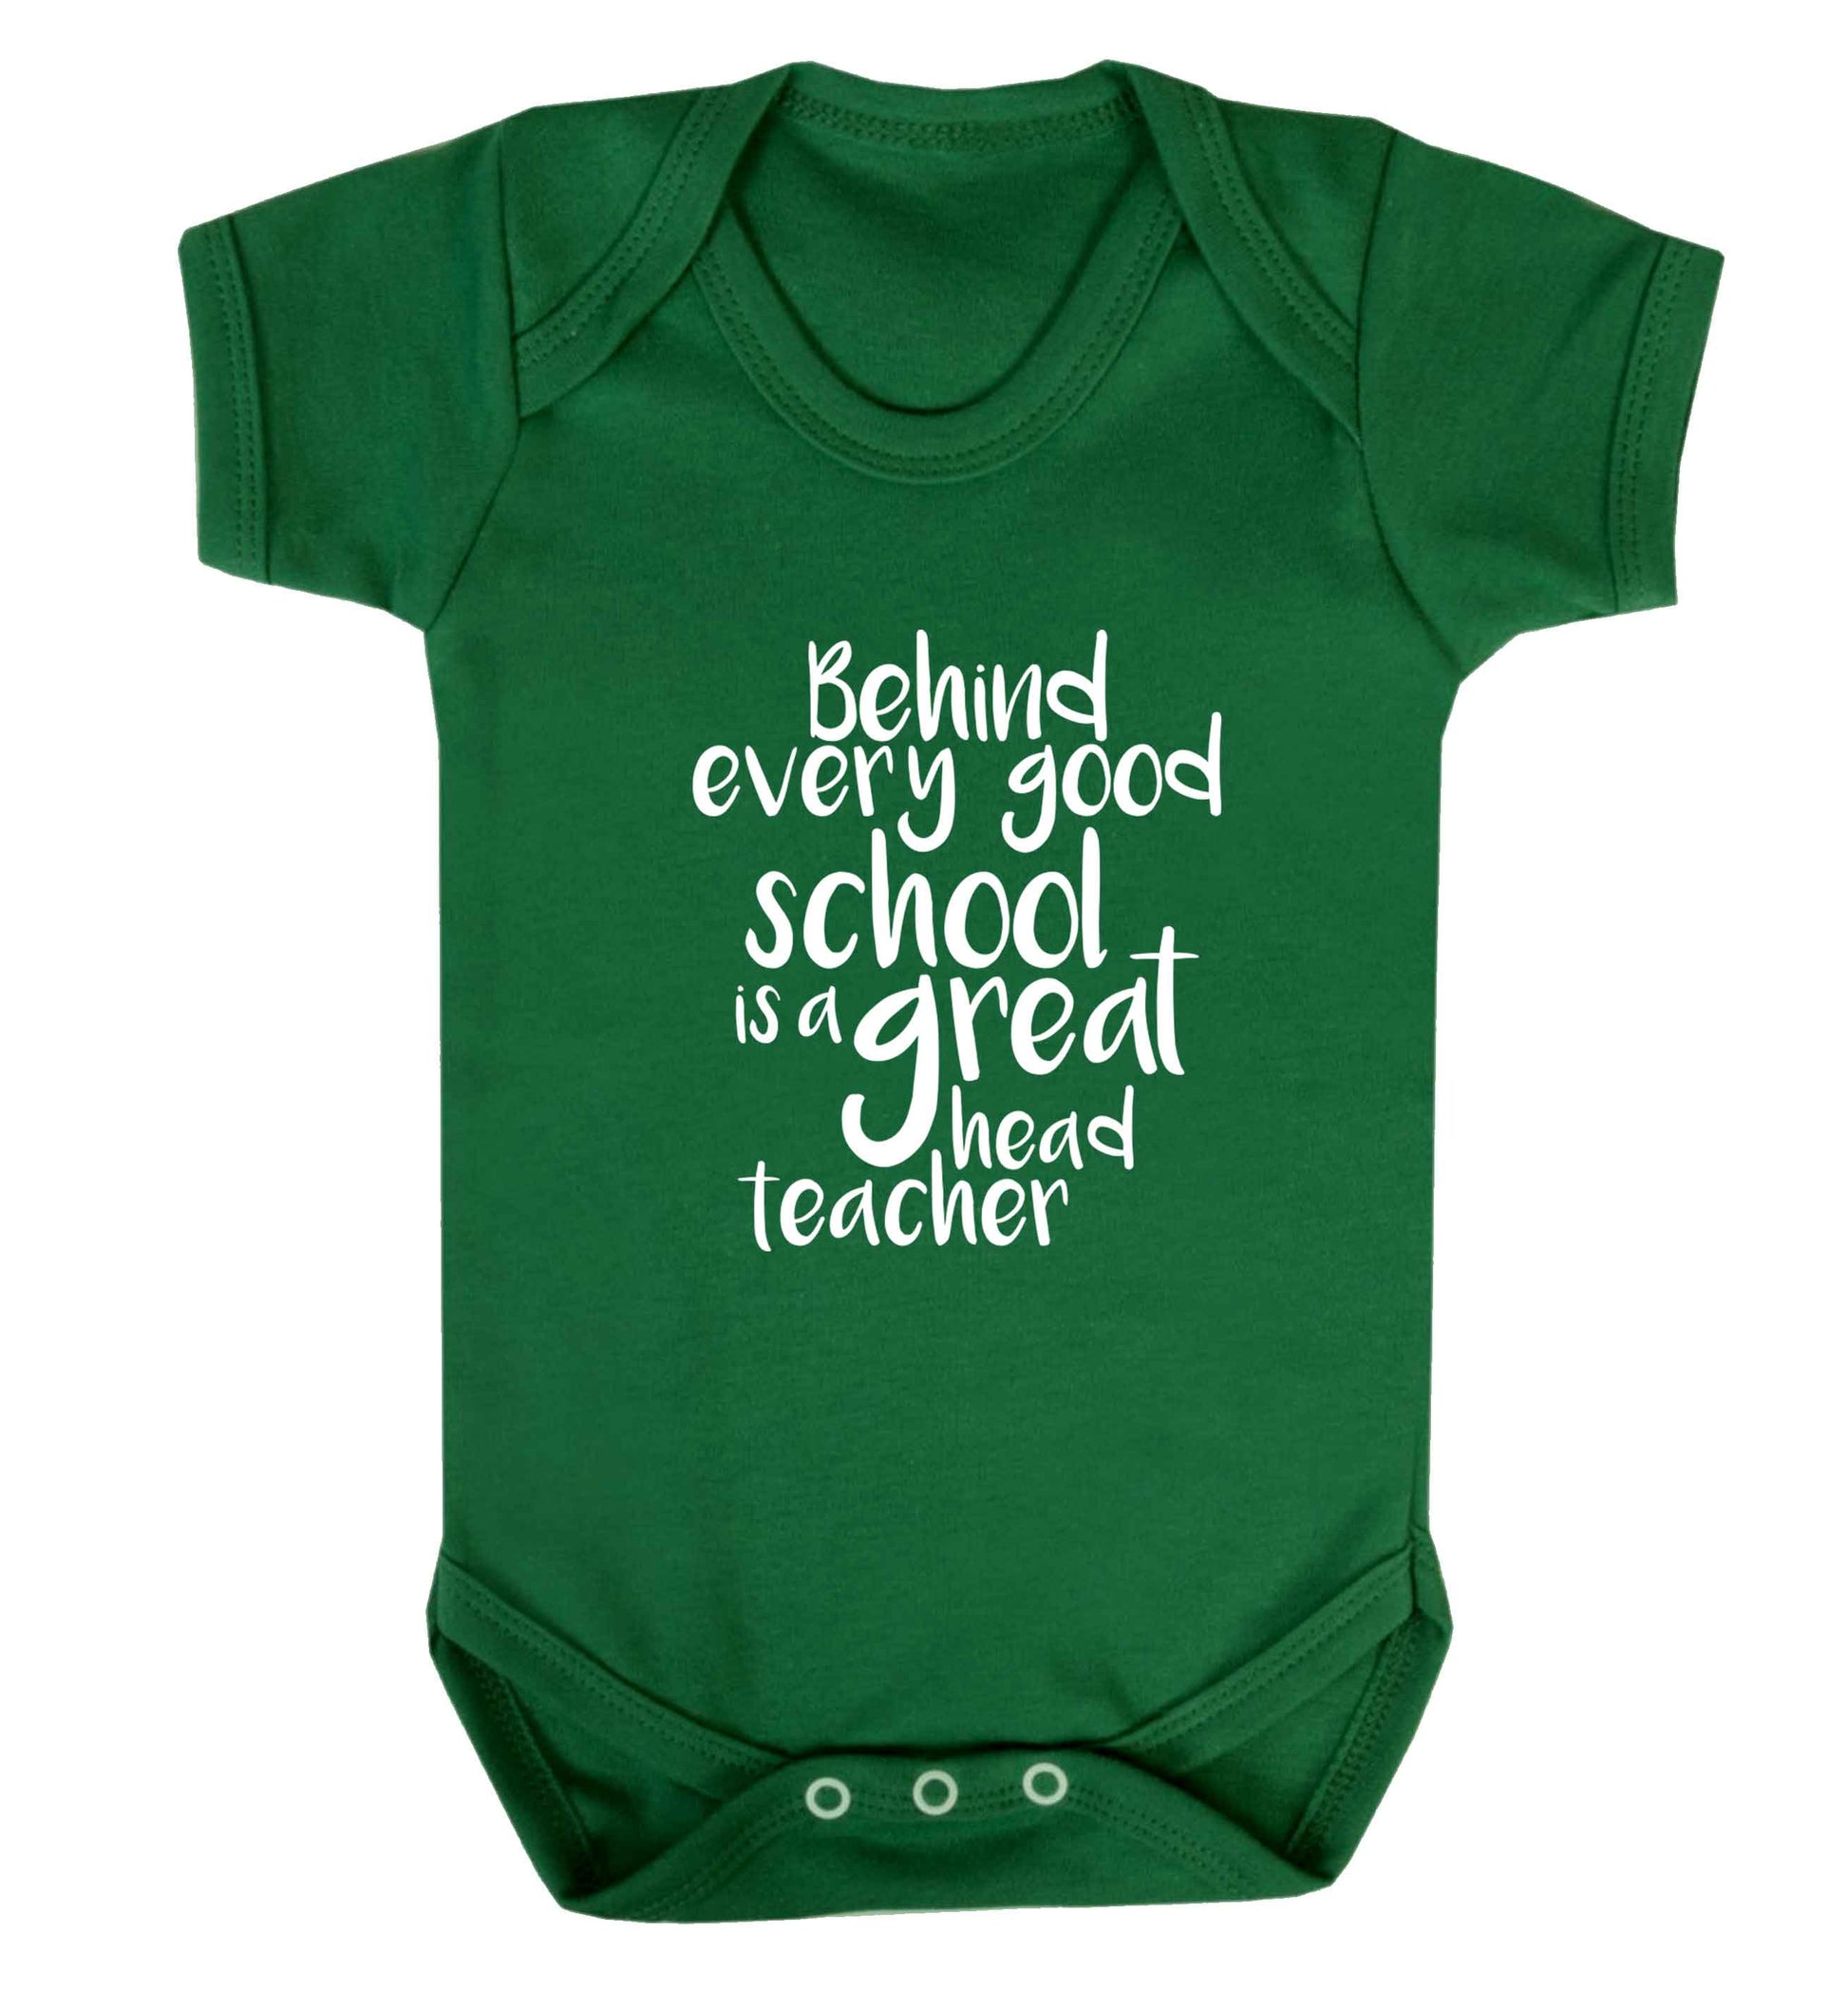 Behind every good school is a great head teacher baby vest green 18-24 months